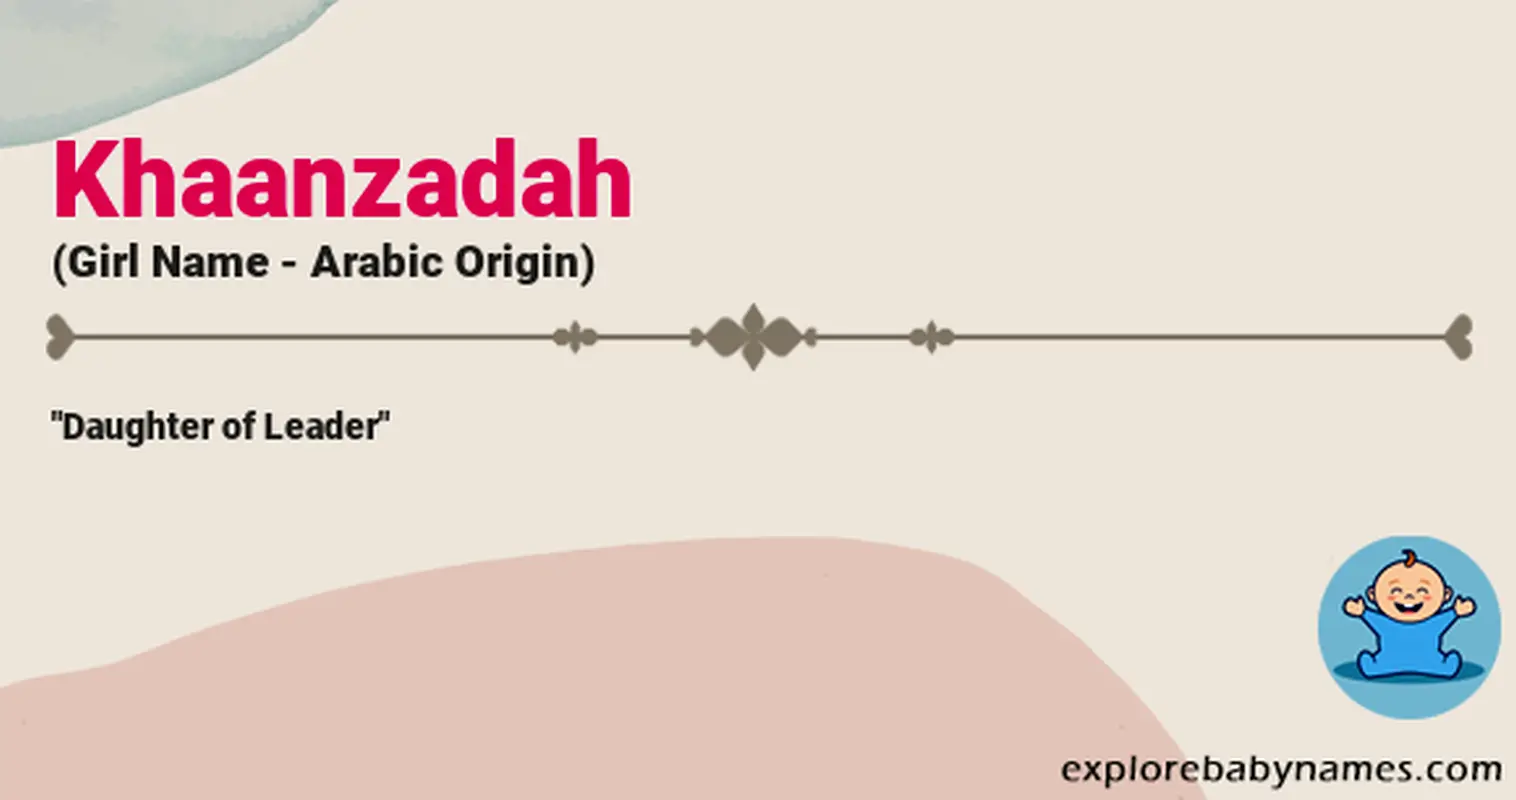 Meaning of Khaanzadah